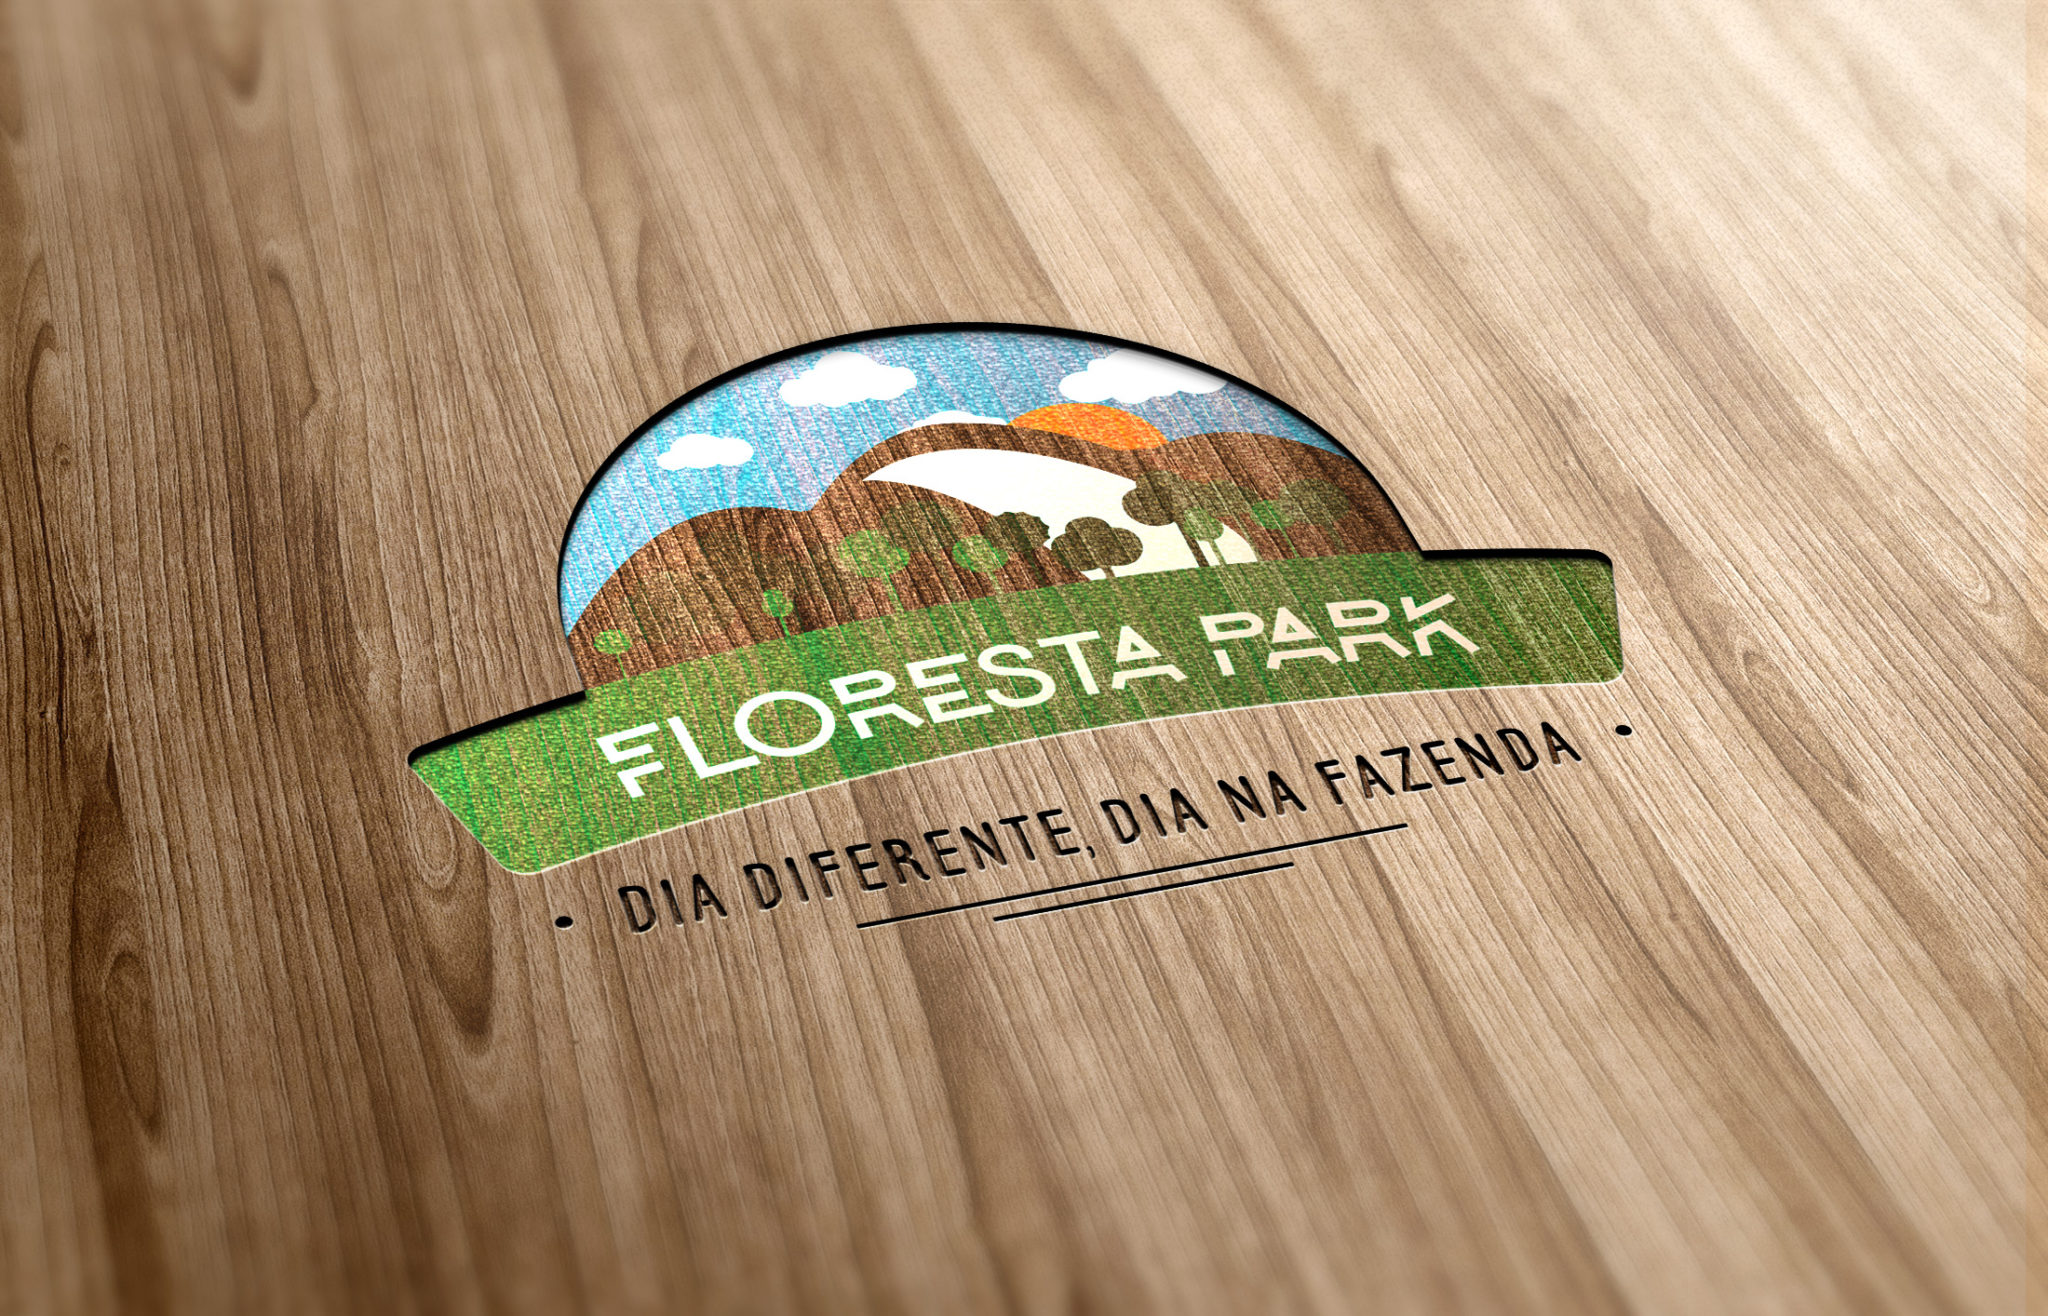 Floresta Park